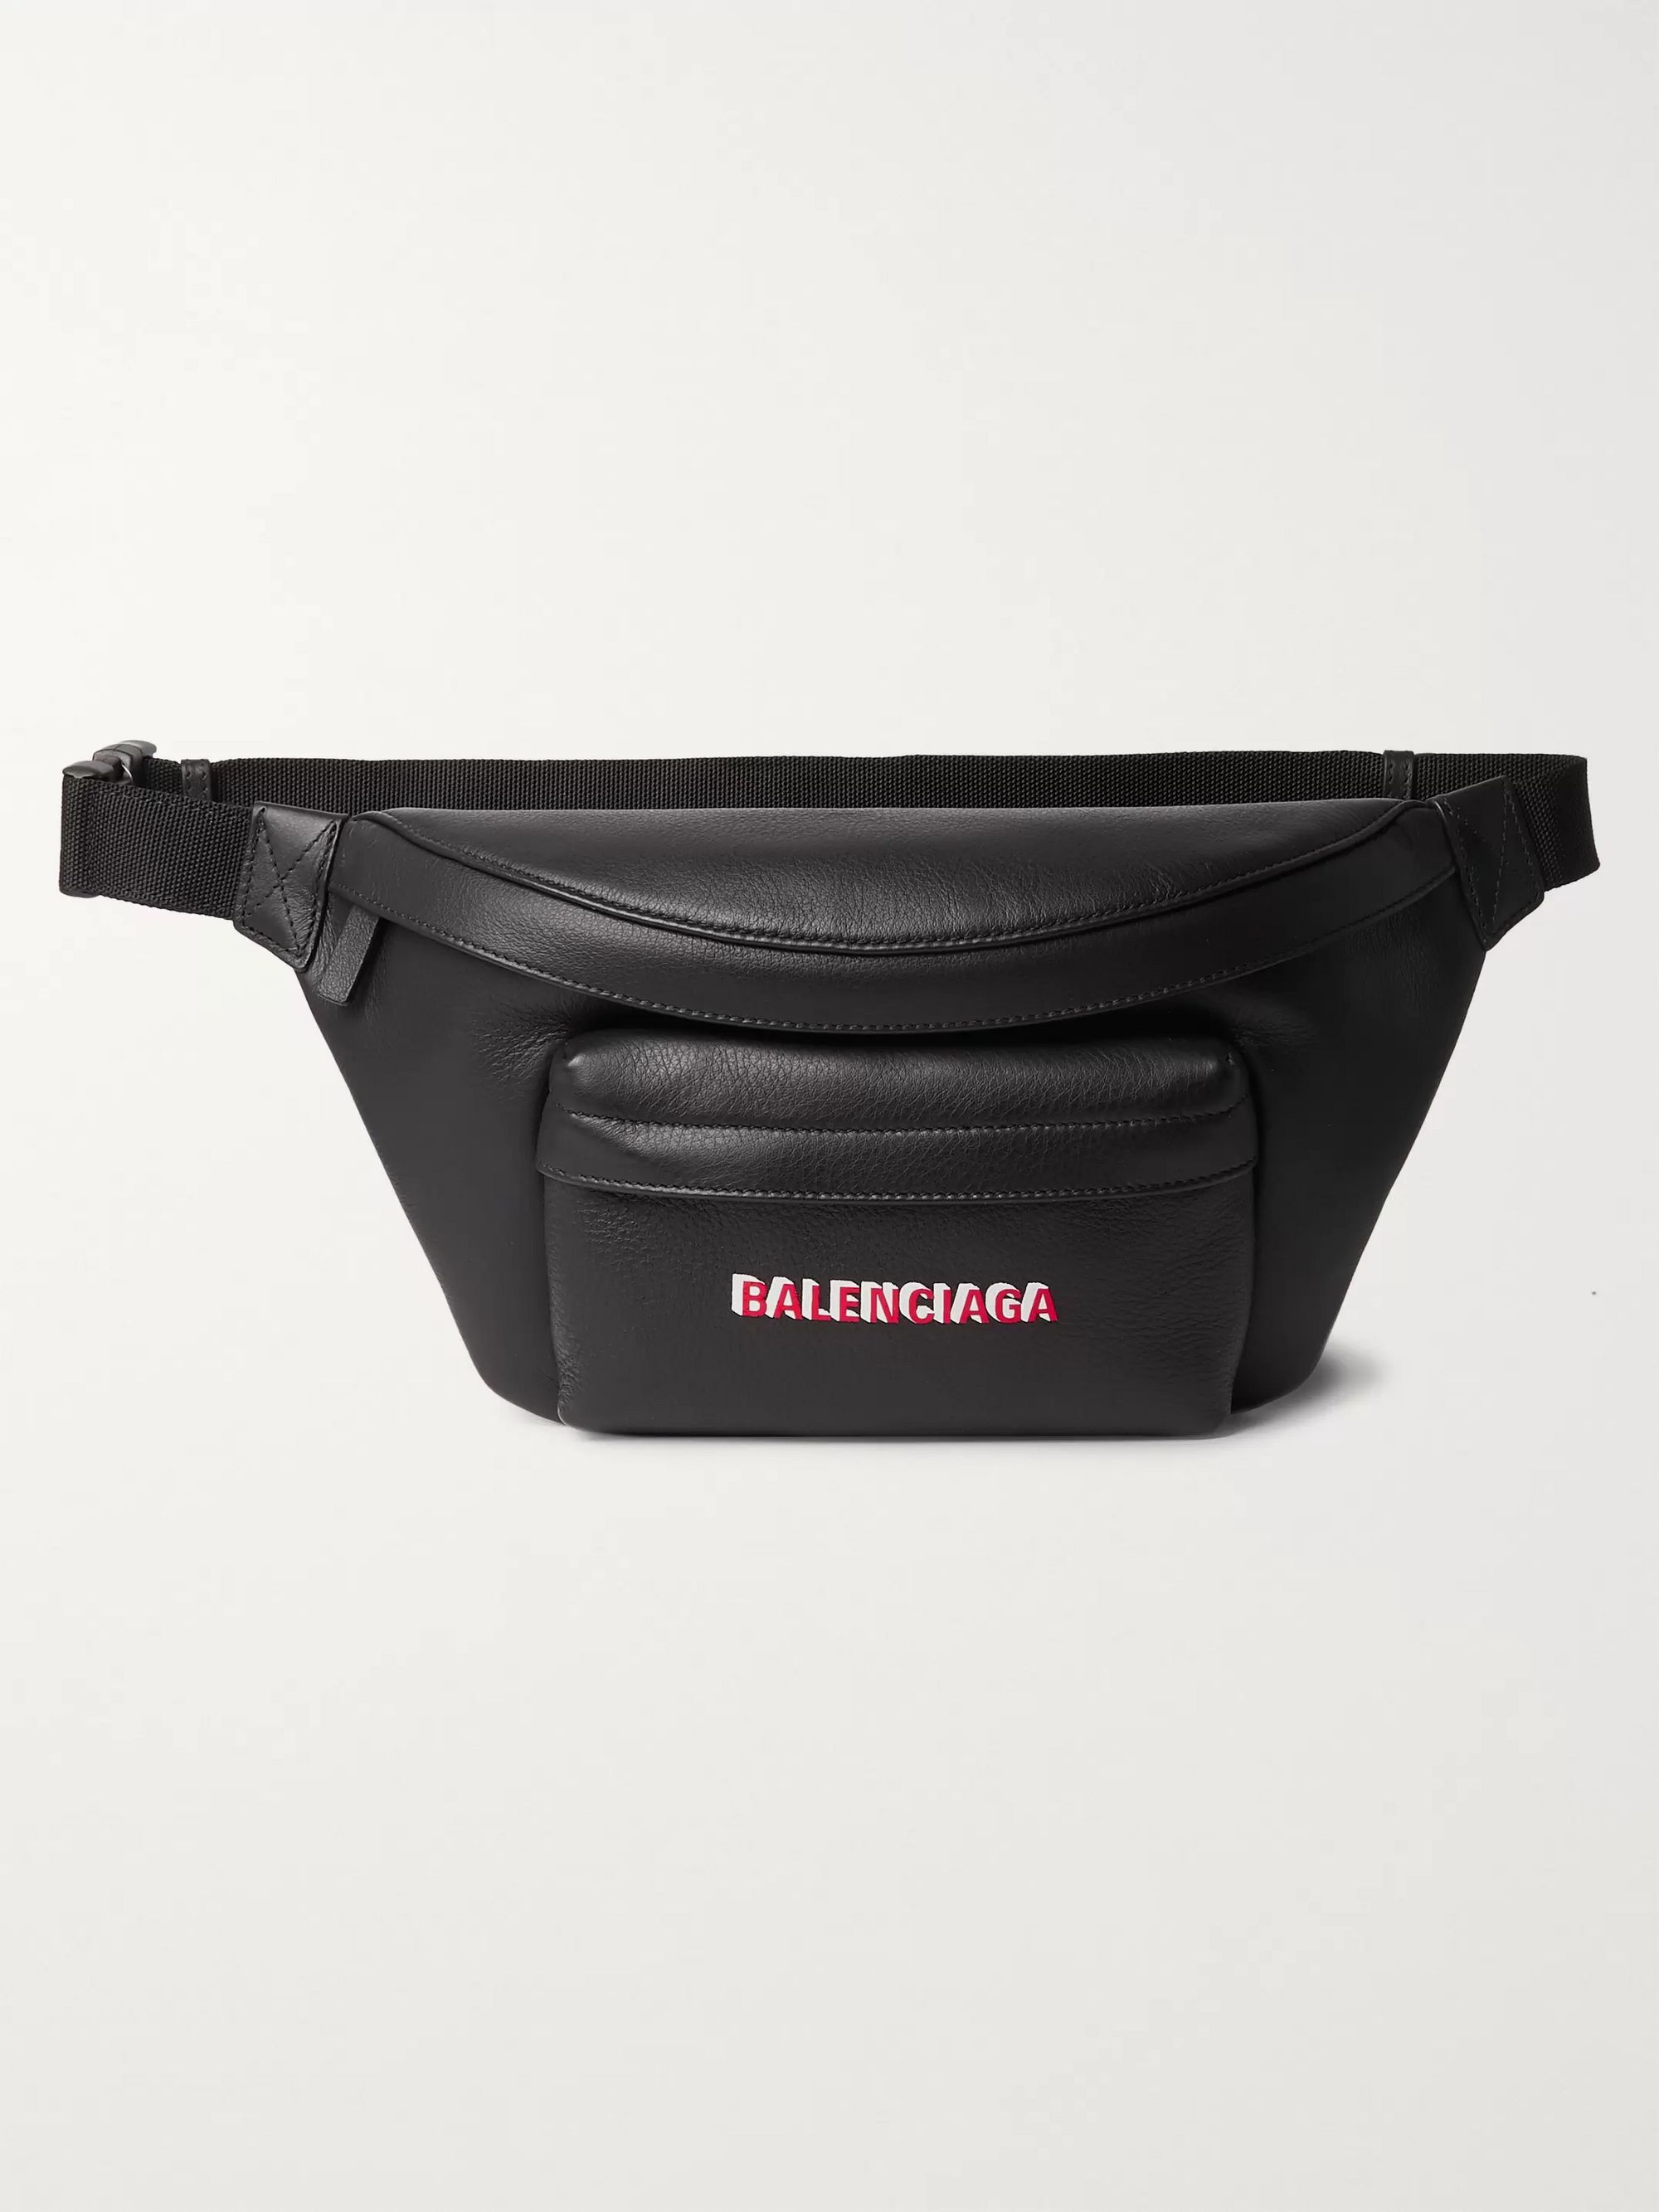 balenciaga everyday logo belt bag